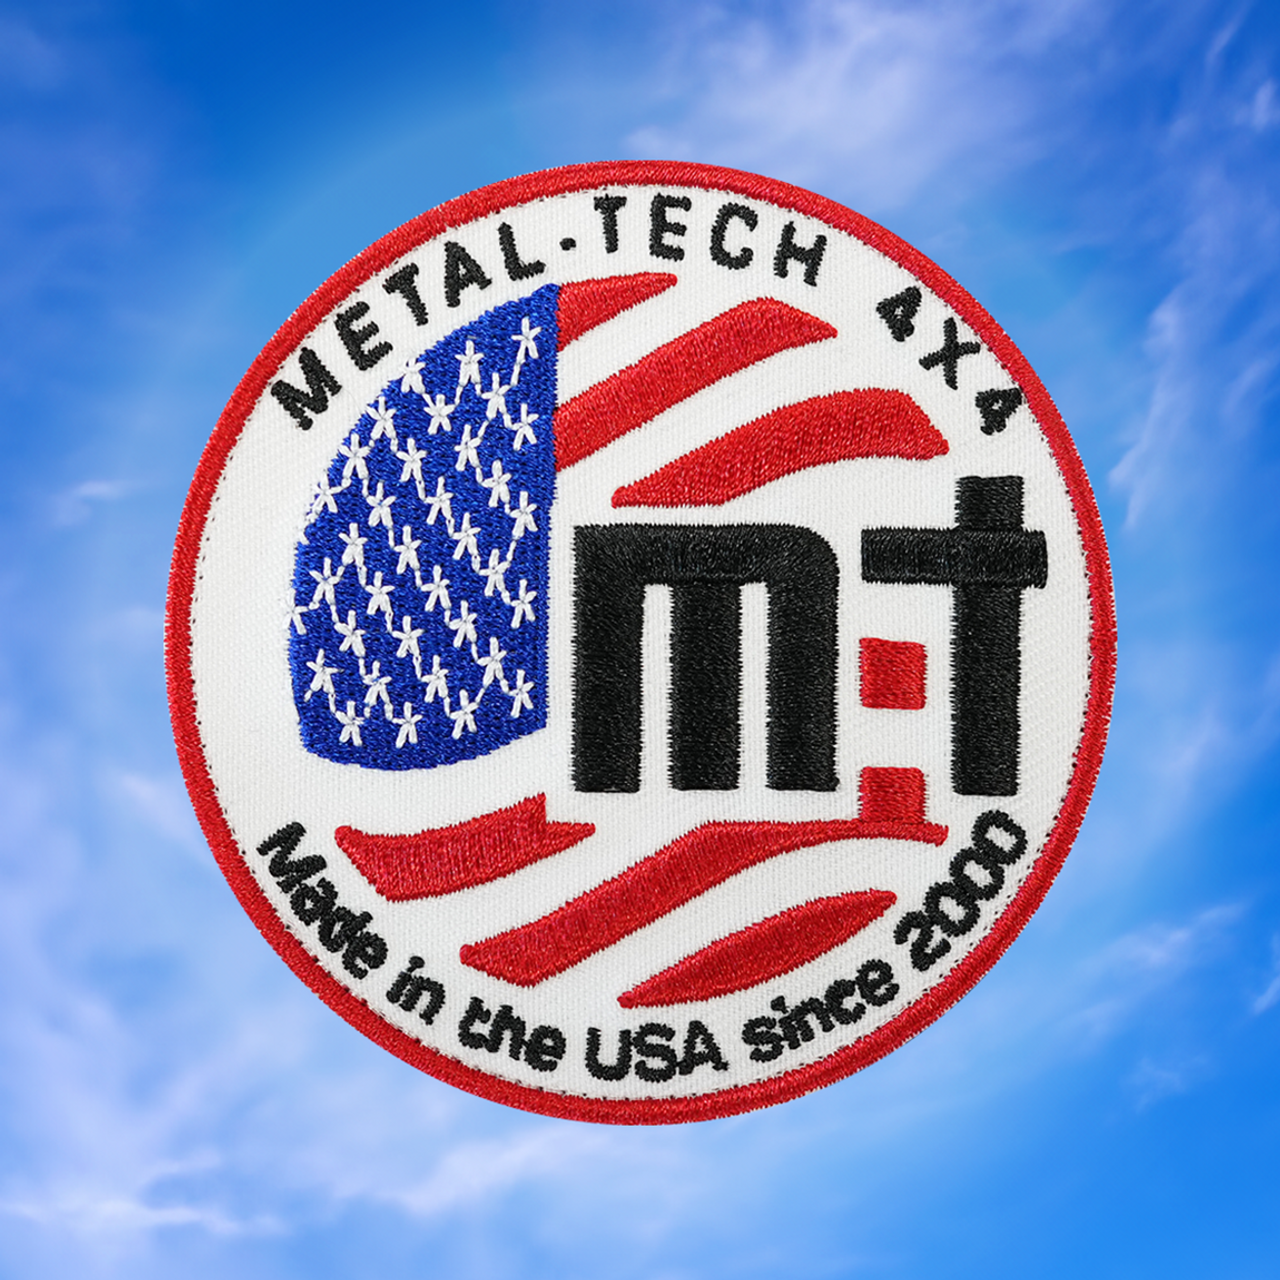 Metal Tech 4x4 USA Patch (All proceeds donated) - Metal Tech 4x4